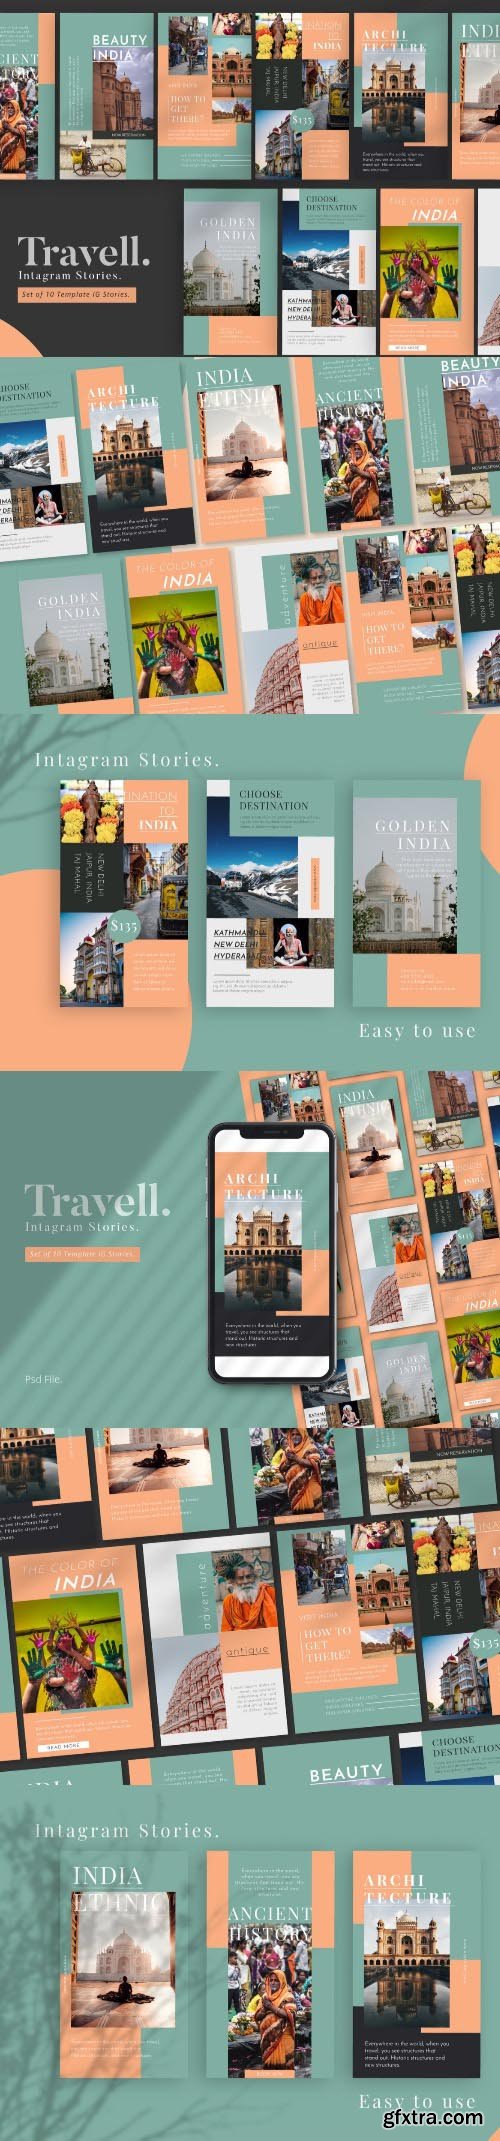 Travel Promotion Instagram Stories Templat